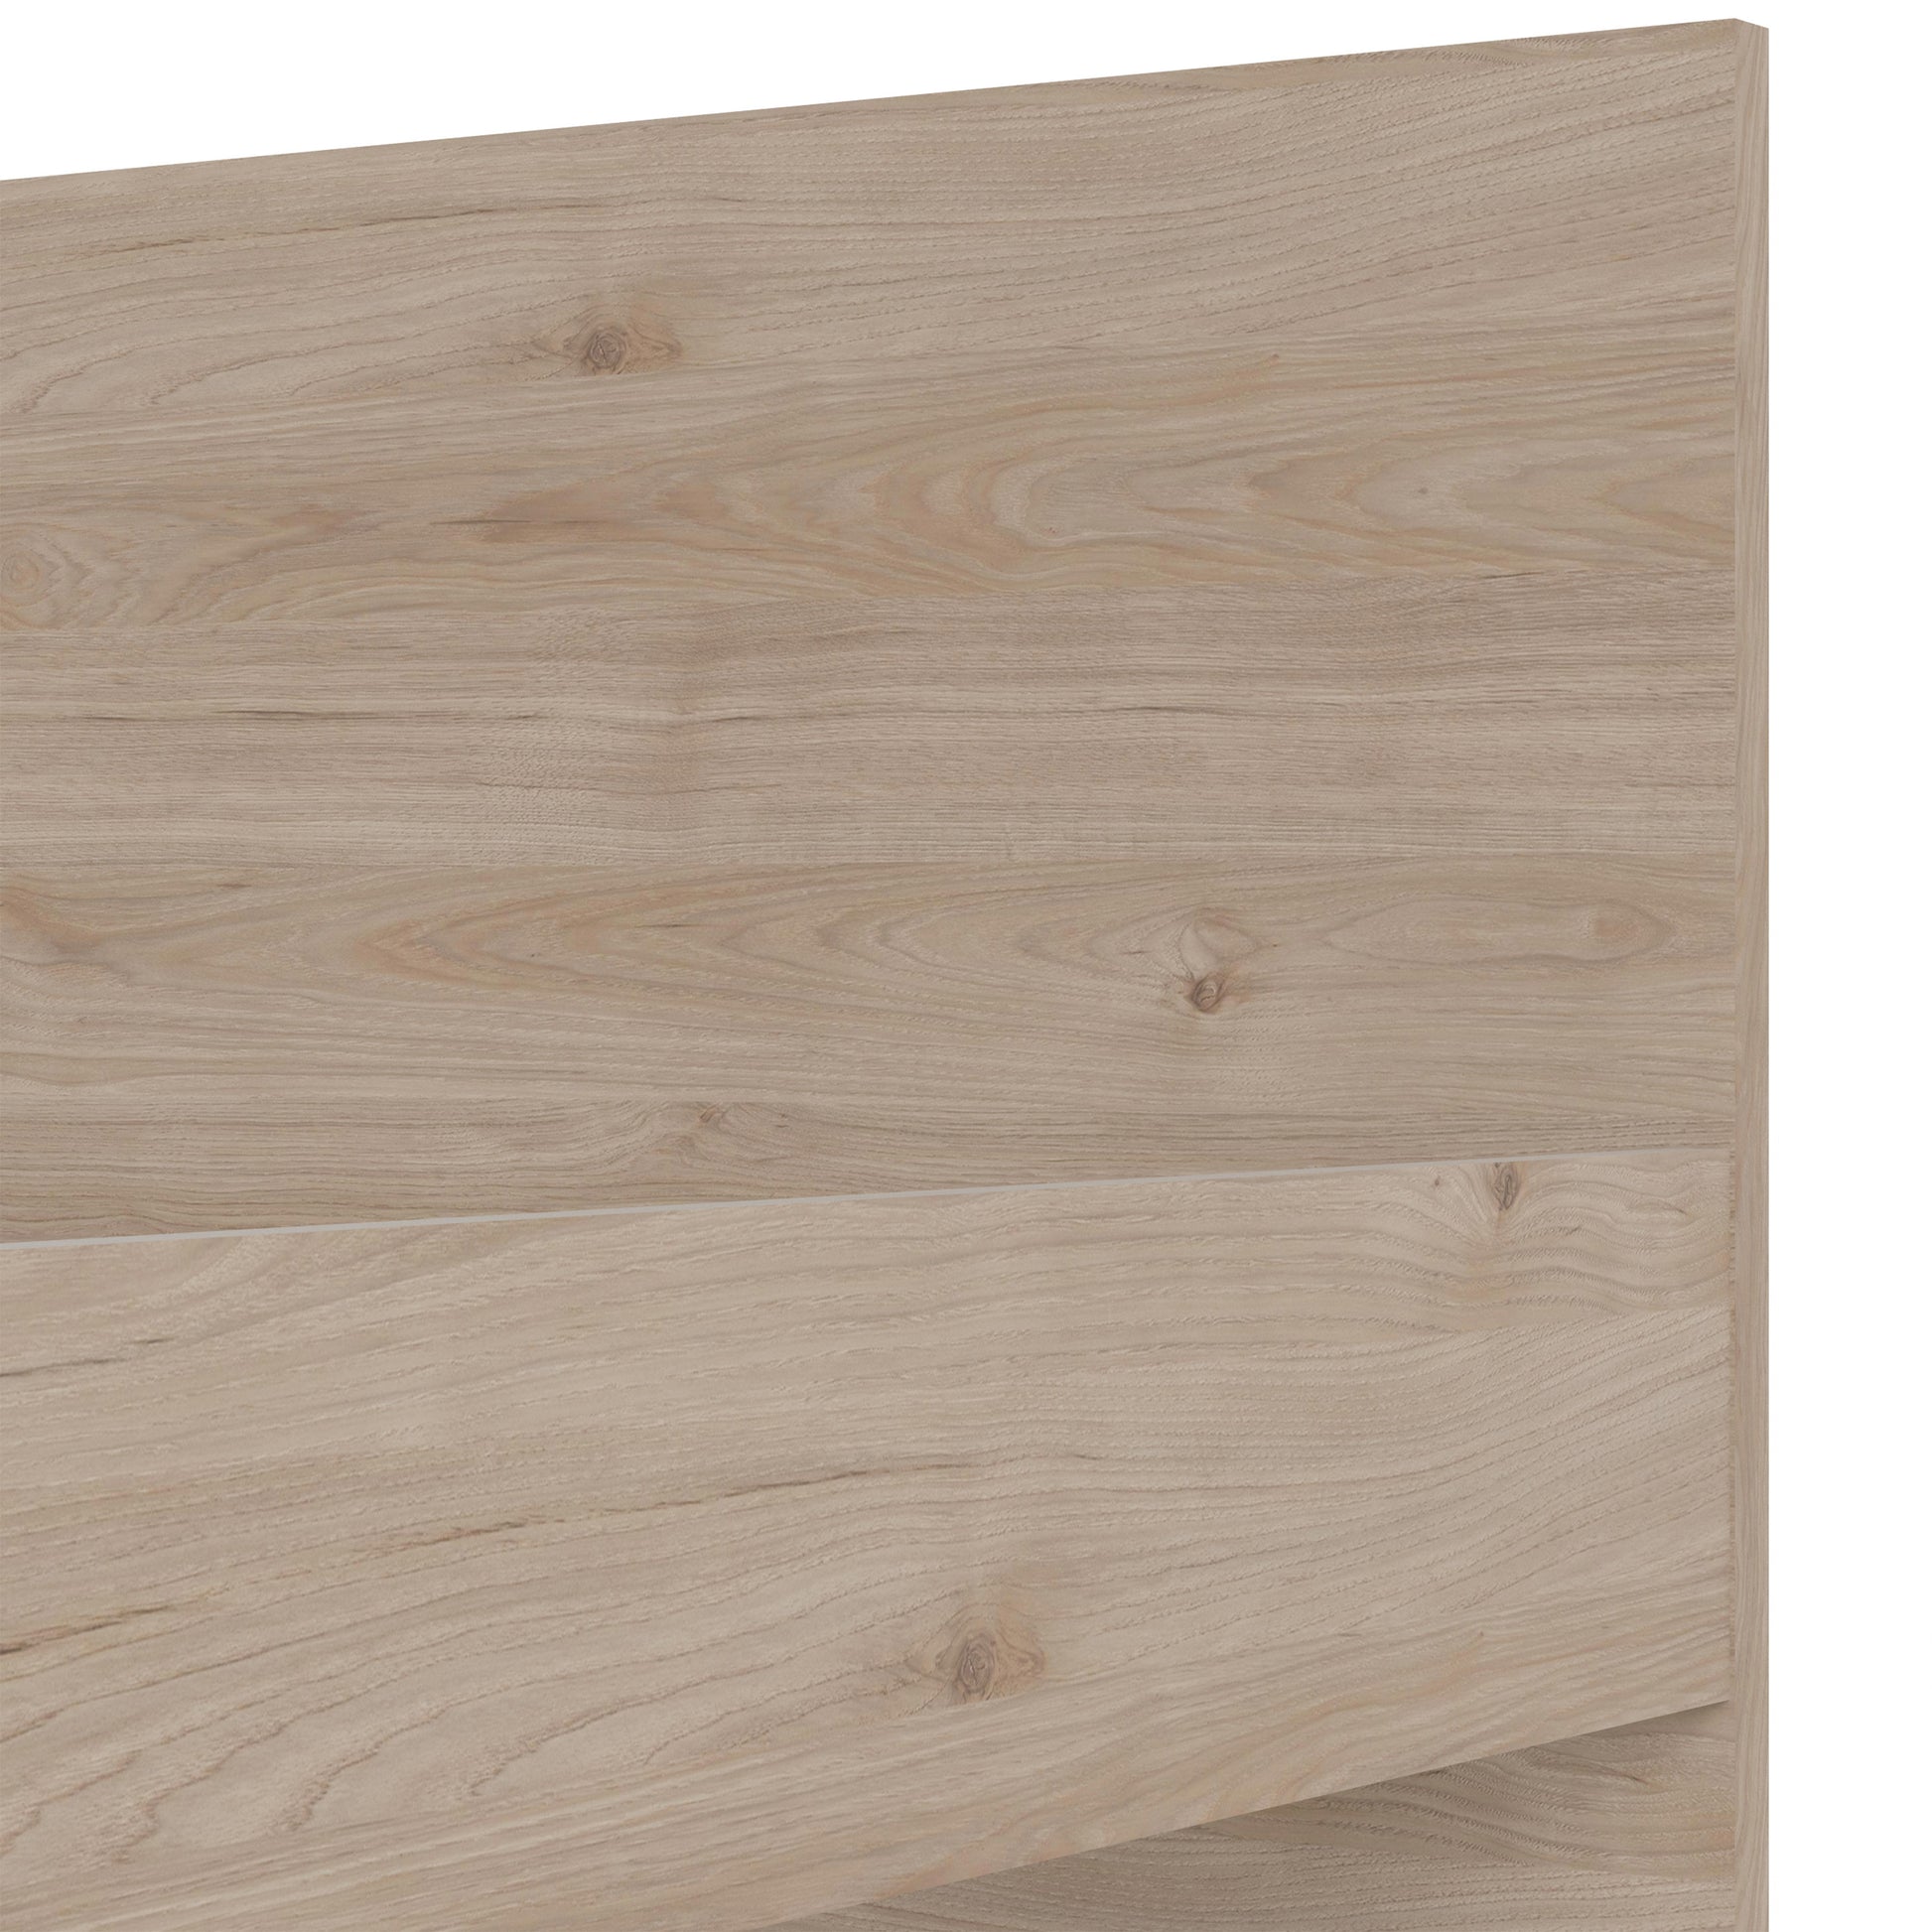 Naia  Single Bed 3ft (90x190) Jackson Hickory Oak structure